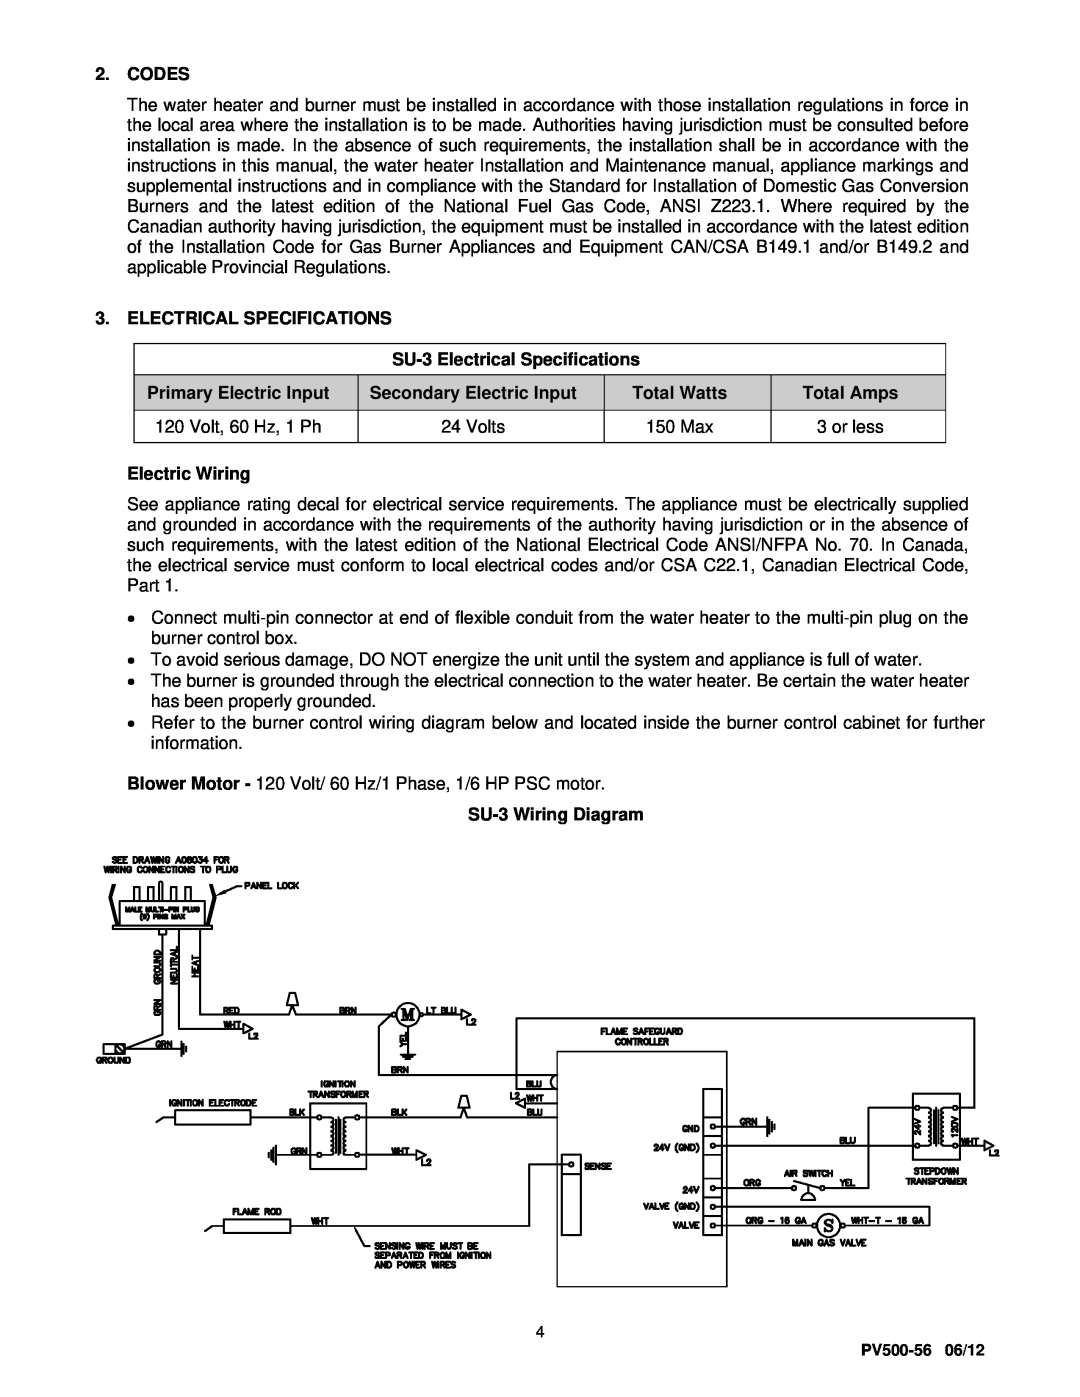 PVI Industries SU-3 manual Codes 